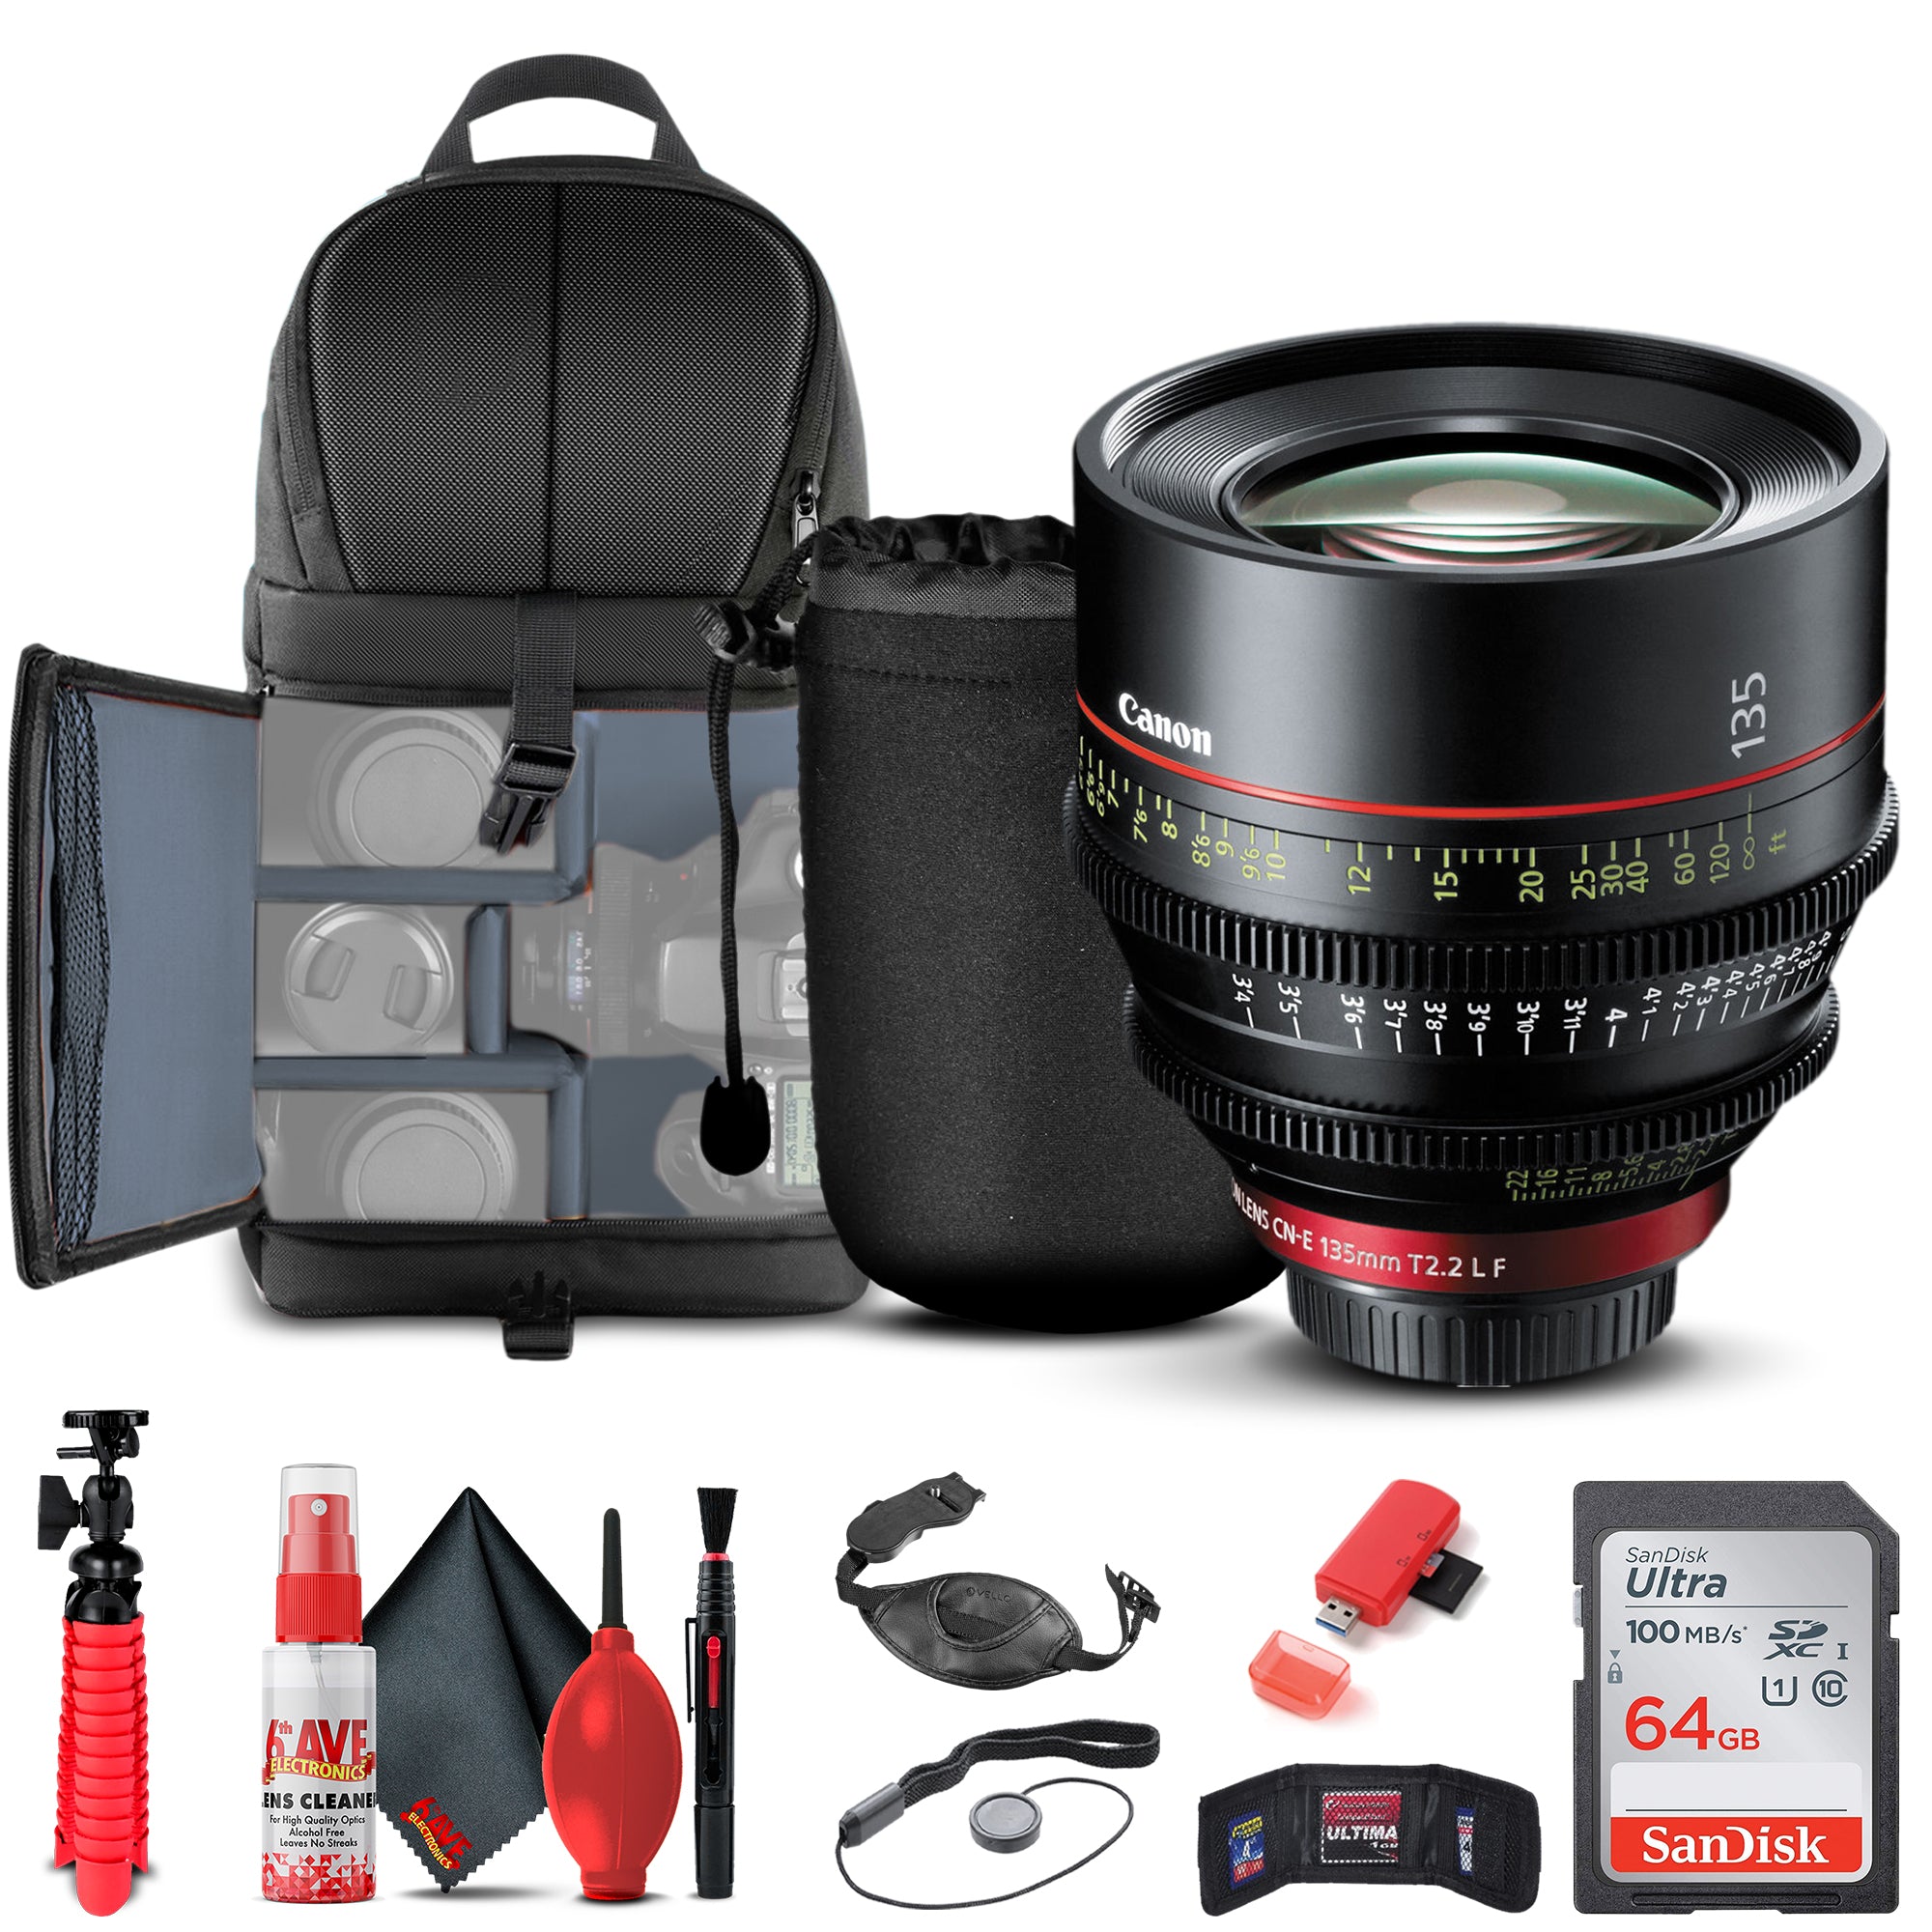 Canon CN-E 135mm T2.2 L F Cinema Prime Lens (EF Mount) (8326B001) + Pro Sling Backpack + Tripod Bundle